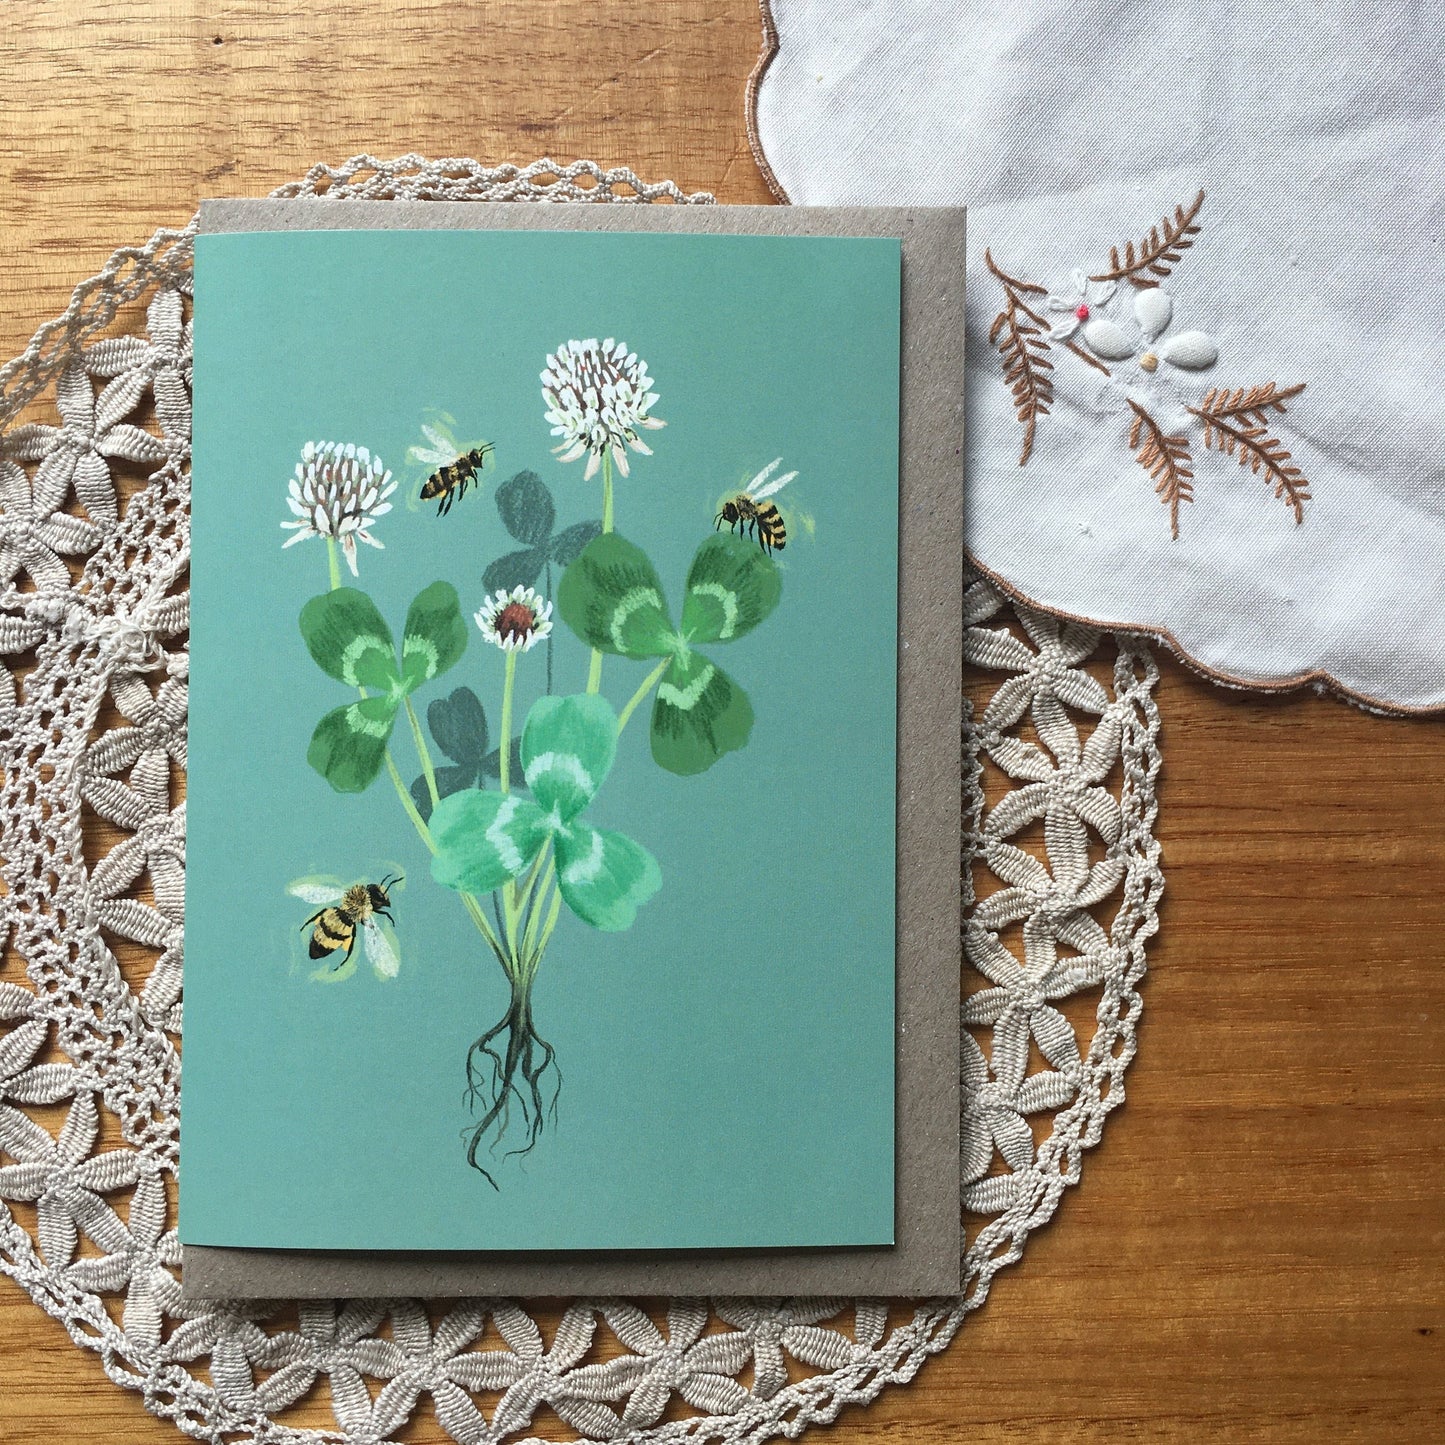 Anna Seed Art | Greeting Card - Clover. Botanical illustration